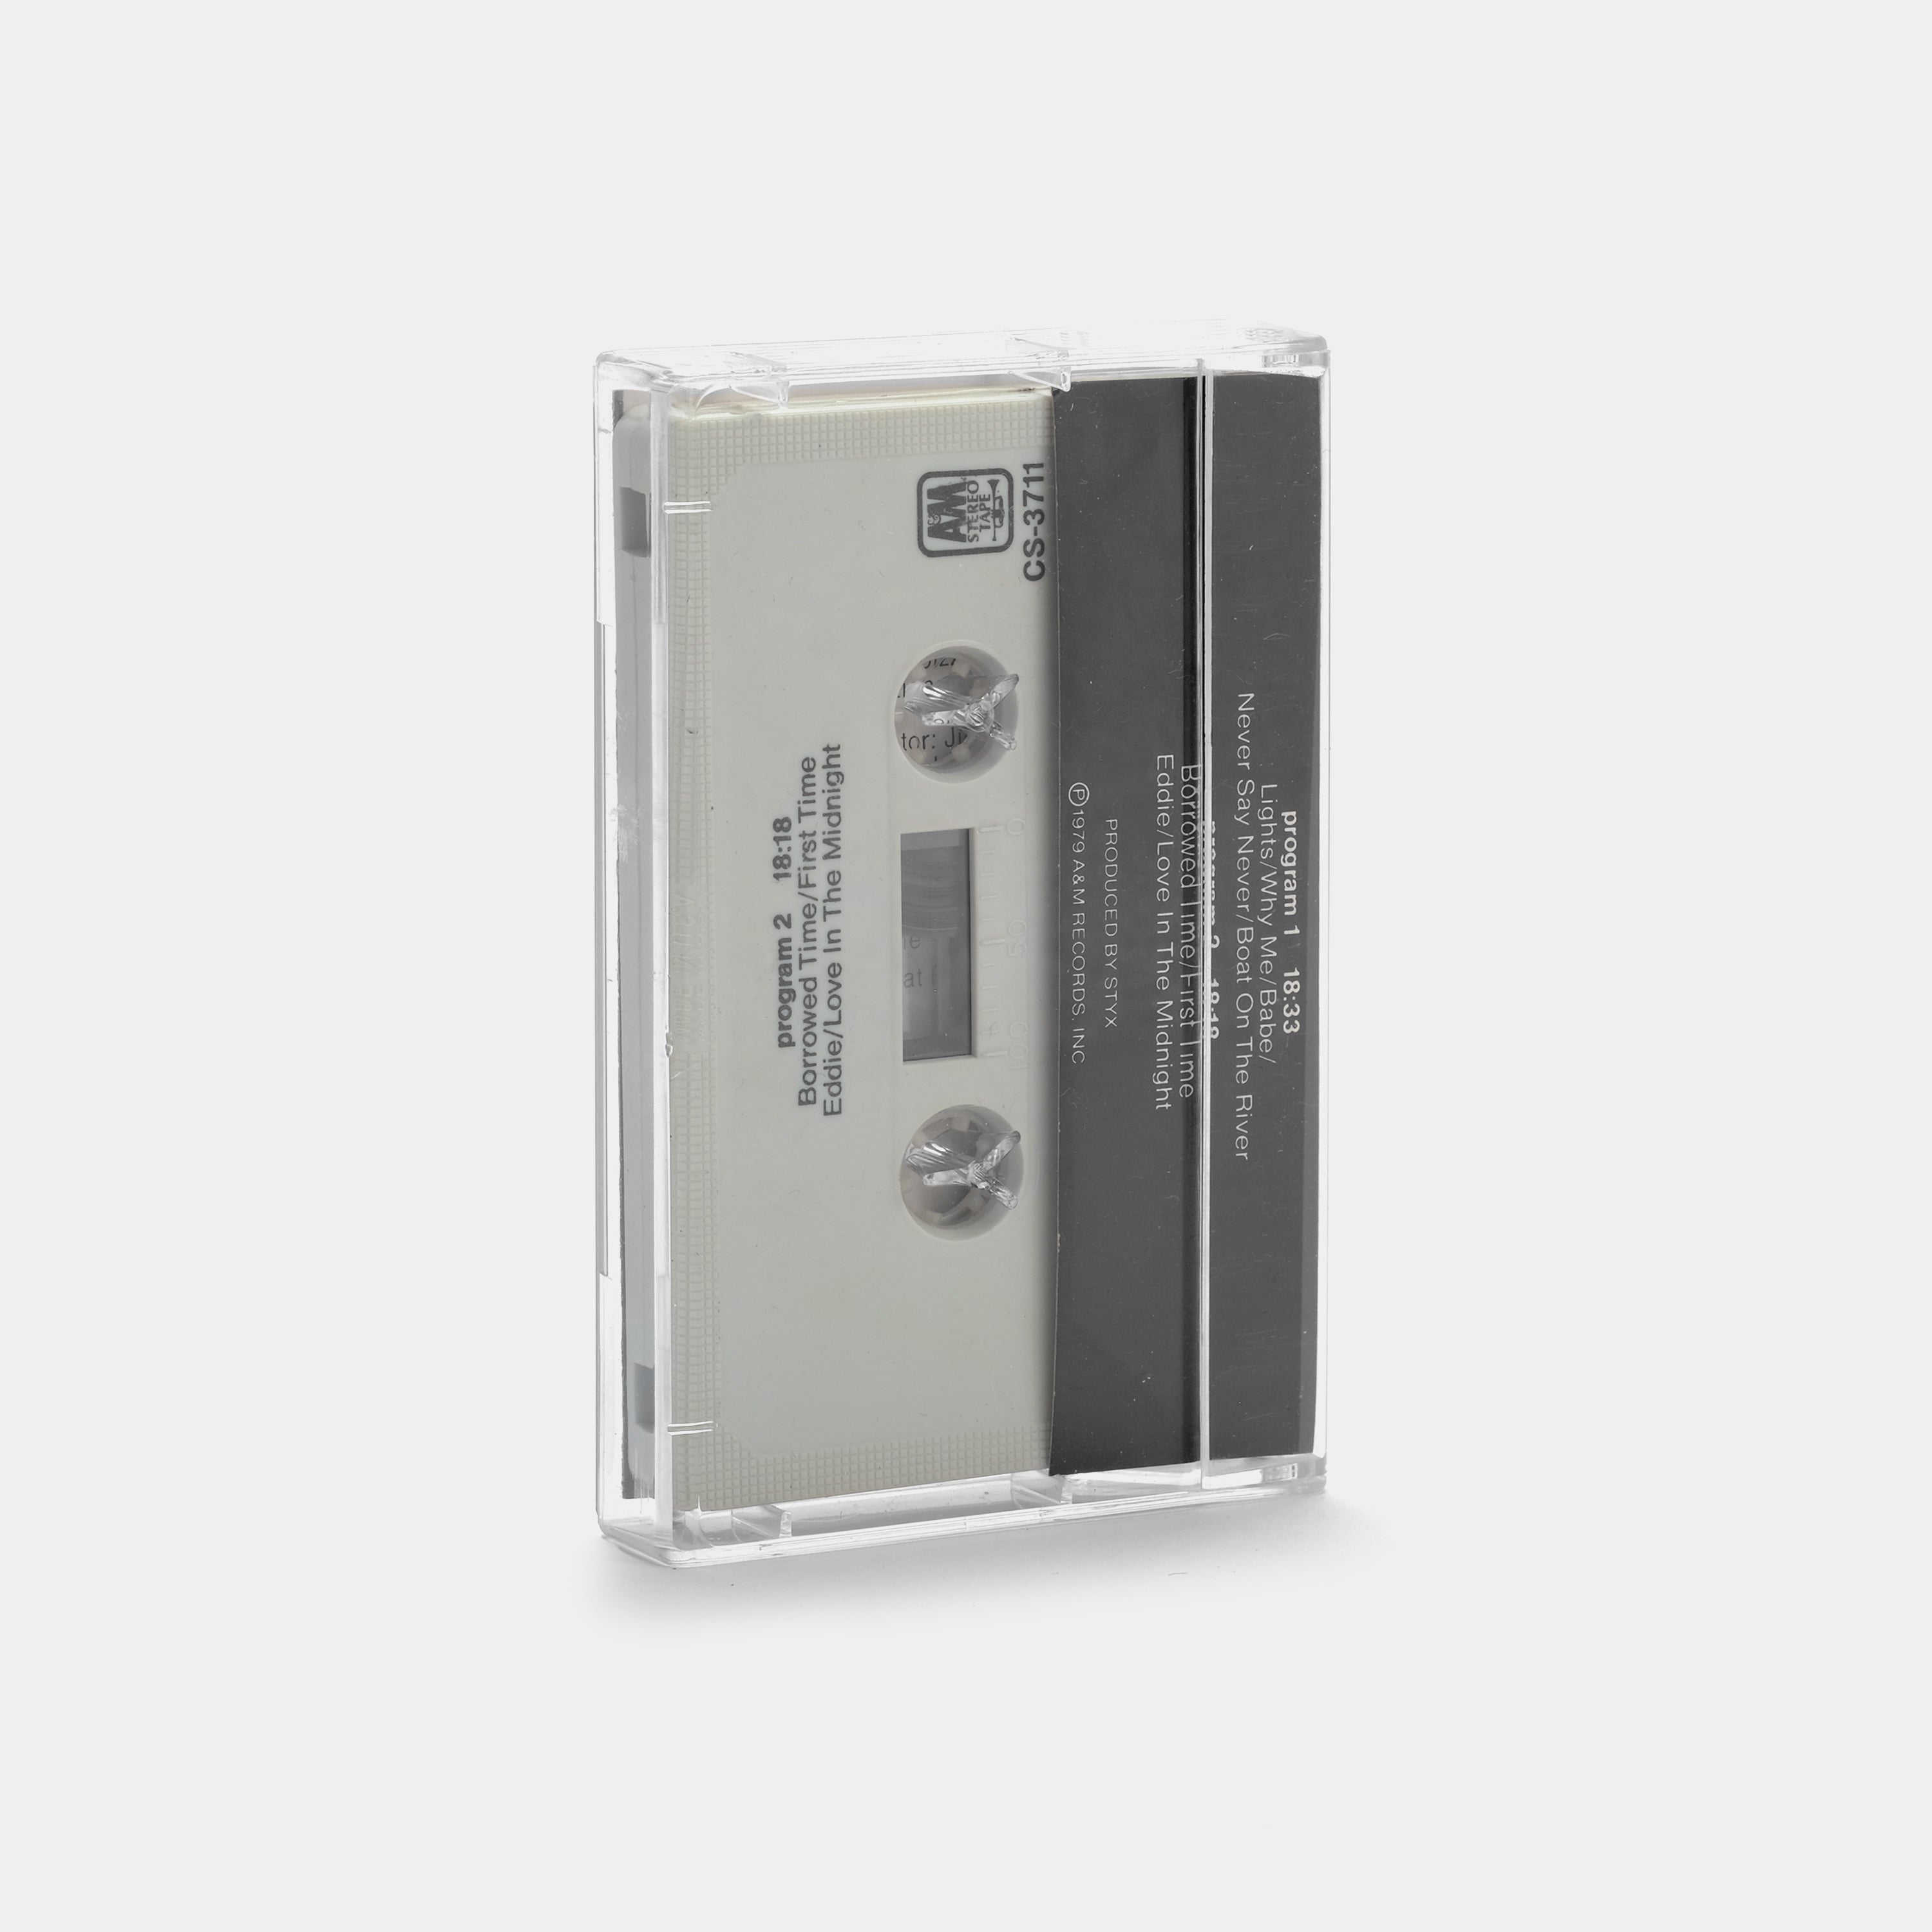 Styx - Cornerstone Cassette Tape